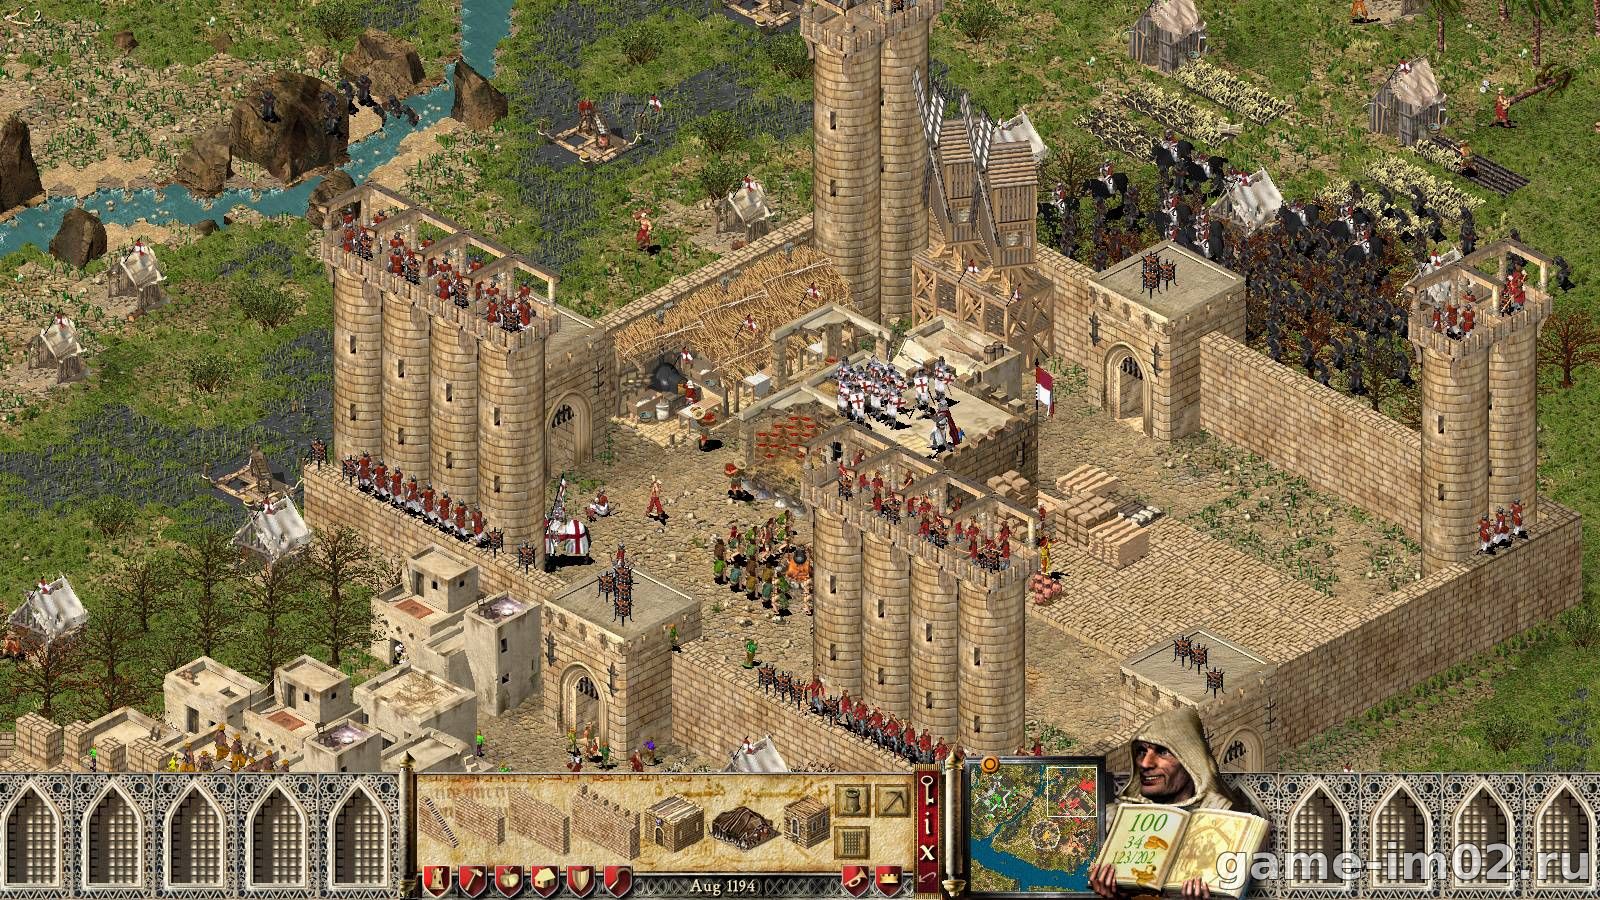 Игра про старый замок. Stronghold (игра, 2001). Стронгхолд Цитадель. Игра стронгхолд 1. Стронгхолд Цитадель крепость.